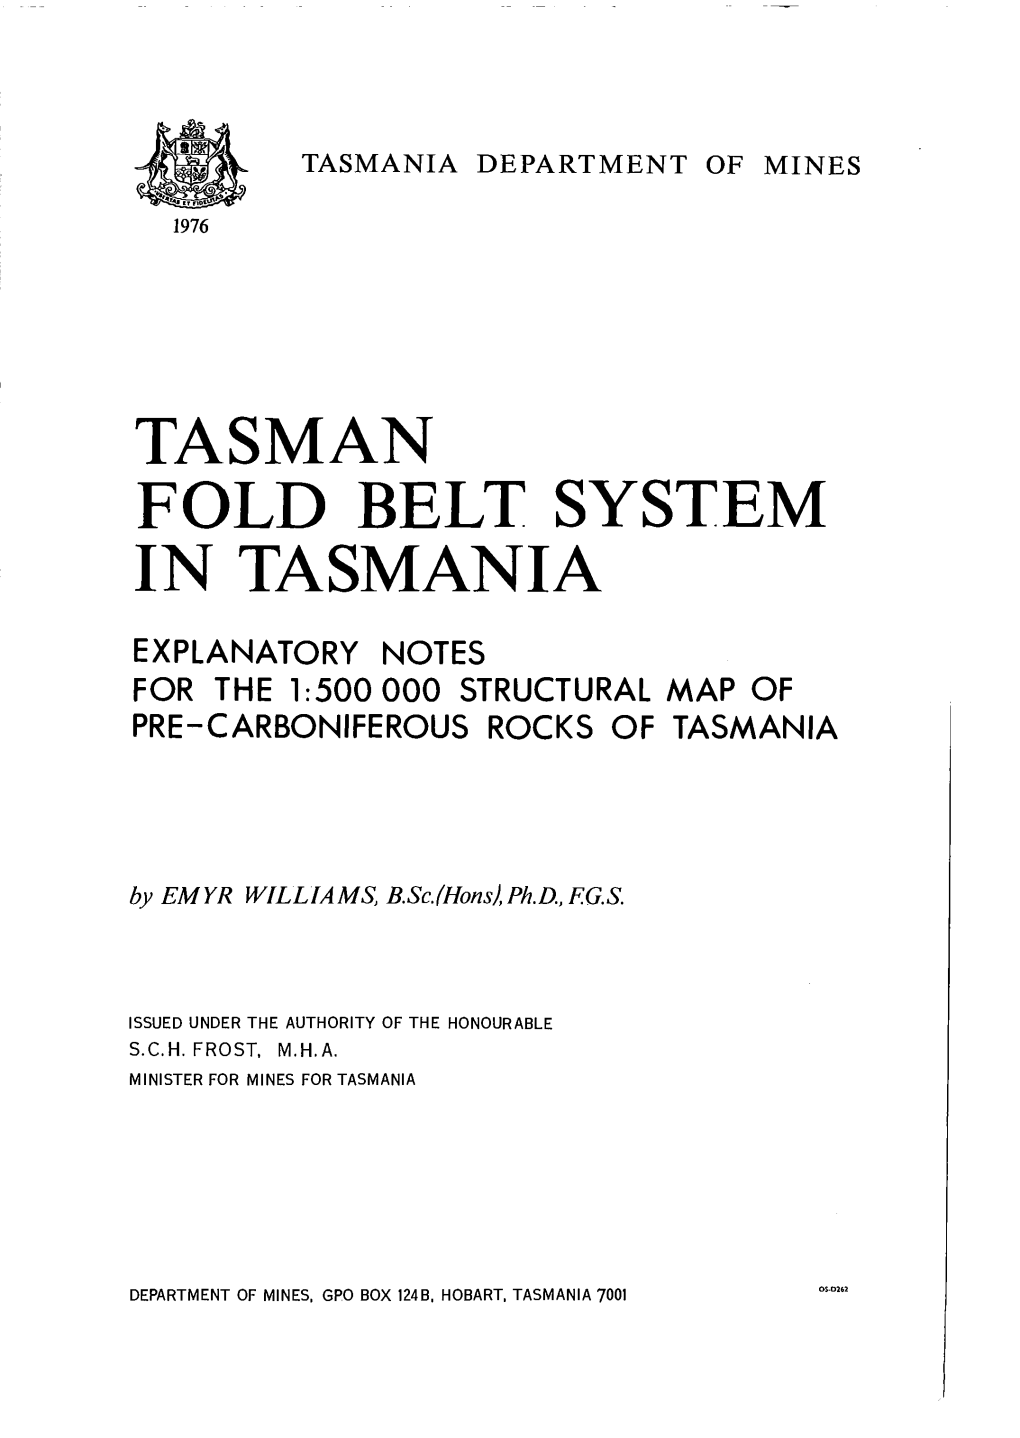 Tasman Fold Belt System in Tasmania